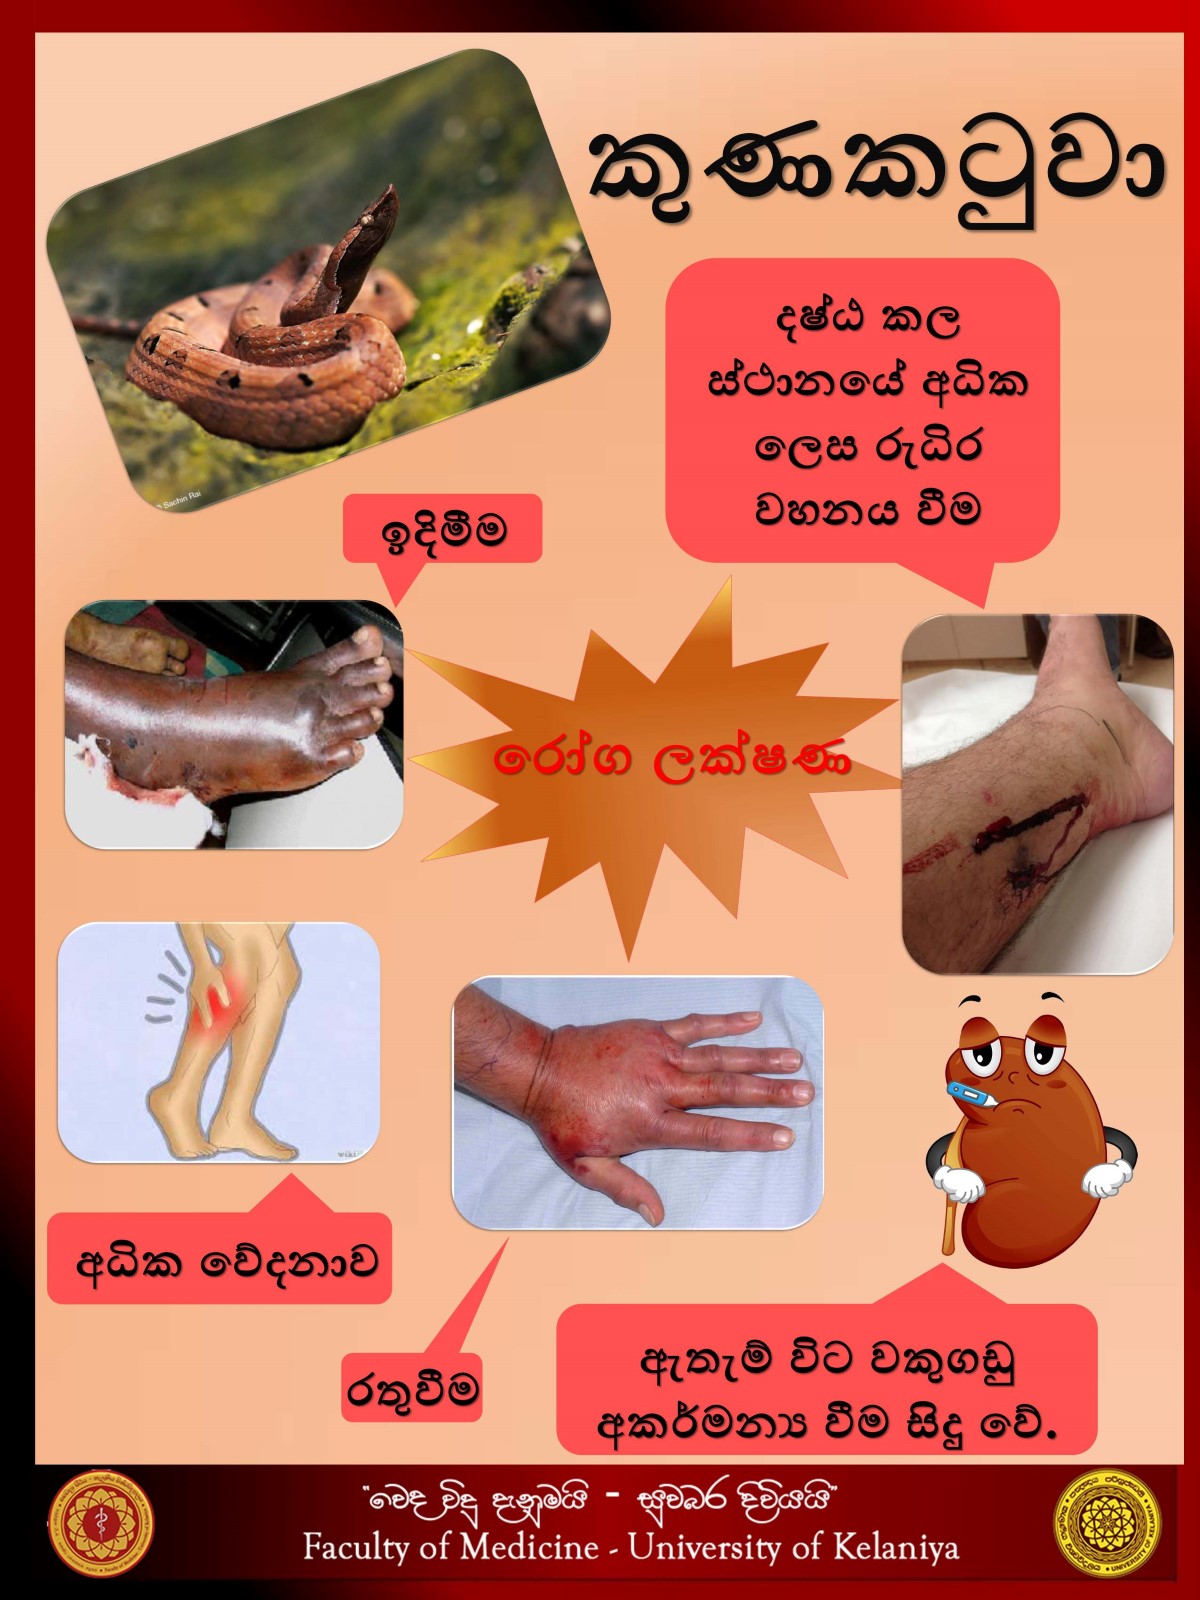 http://medicine.kln.ac.lk/vedavidudanuma/images/gallery/Trauma_Zone/Toxicology/kunakatuwa_001.jpg